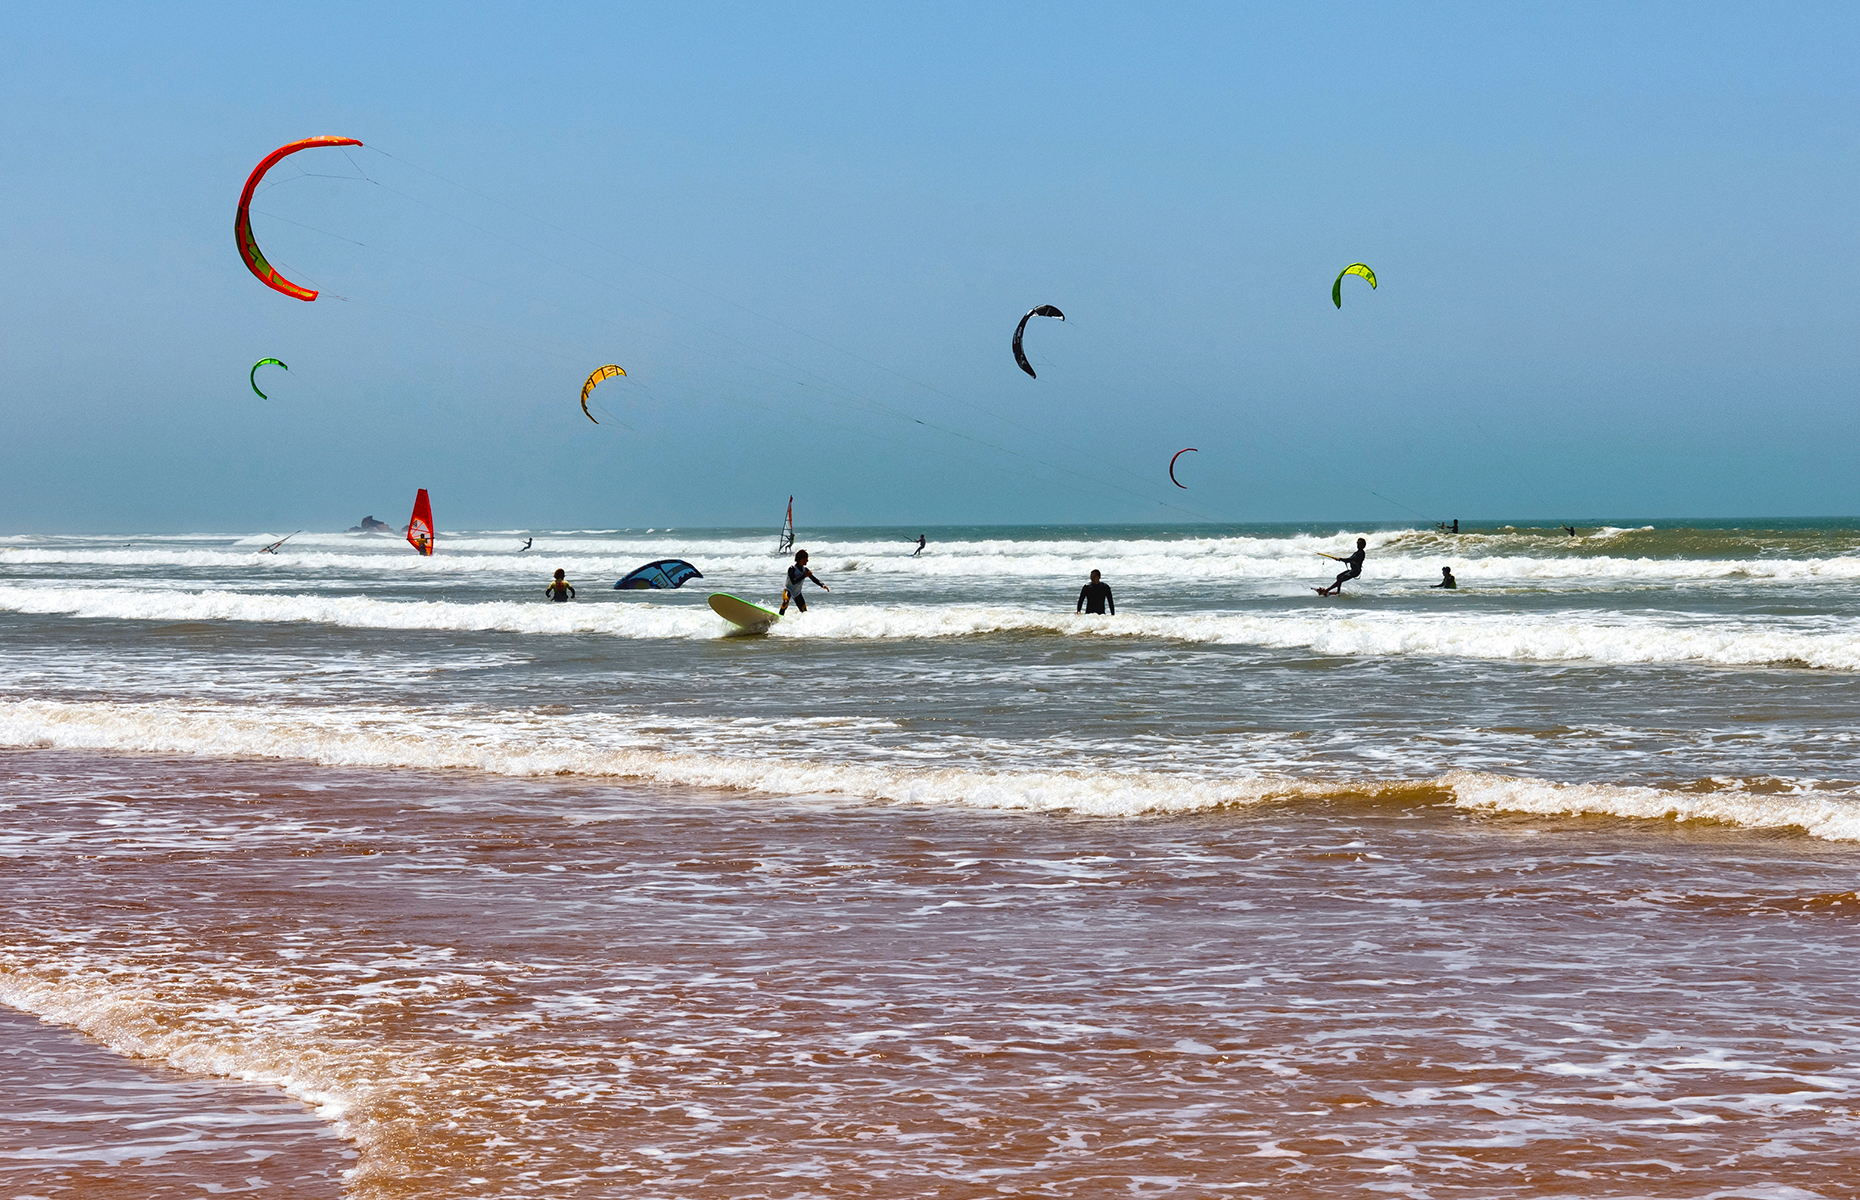 Essaouira Beach, Morocco (Image: Alexey Pevnev/Shutterstock)